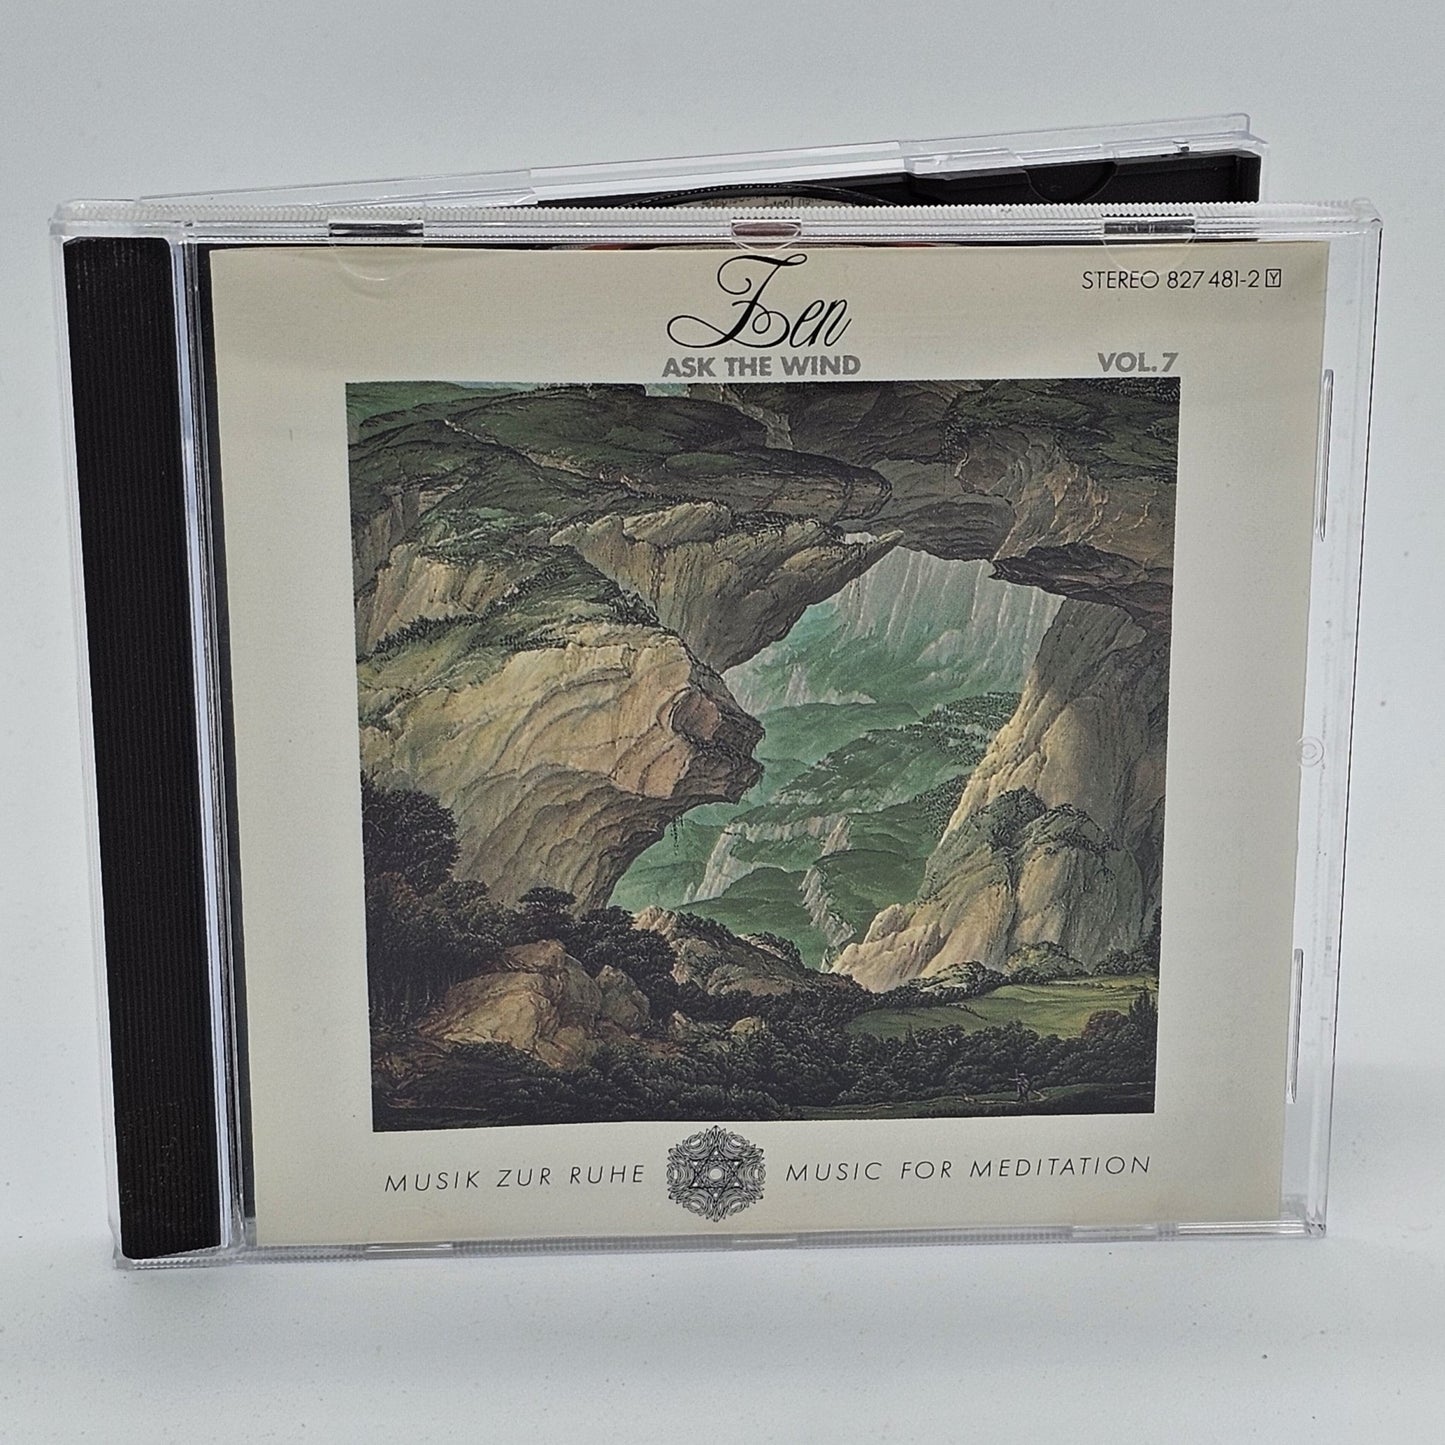 Polydor Records - Muzik Zur Ruhe Vol. 7 | Zen Ask The Wind | CD - Compact Disc - Steady Bunny Shop